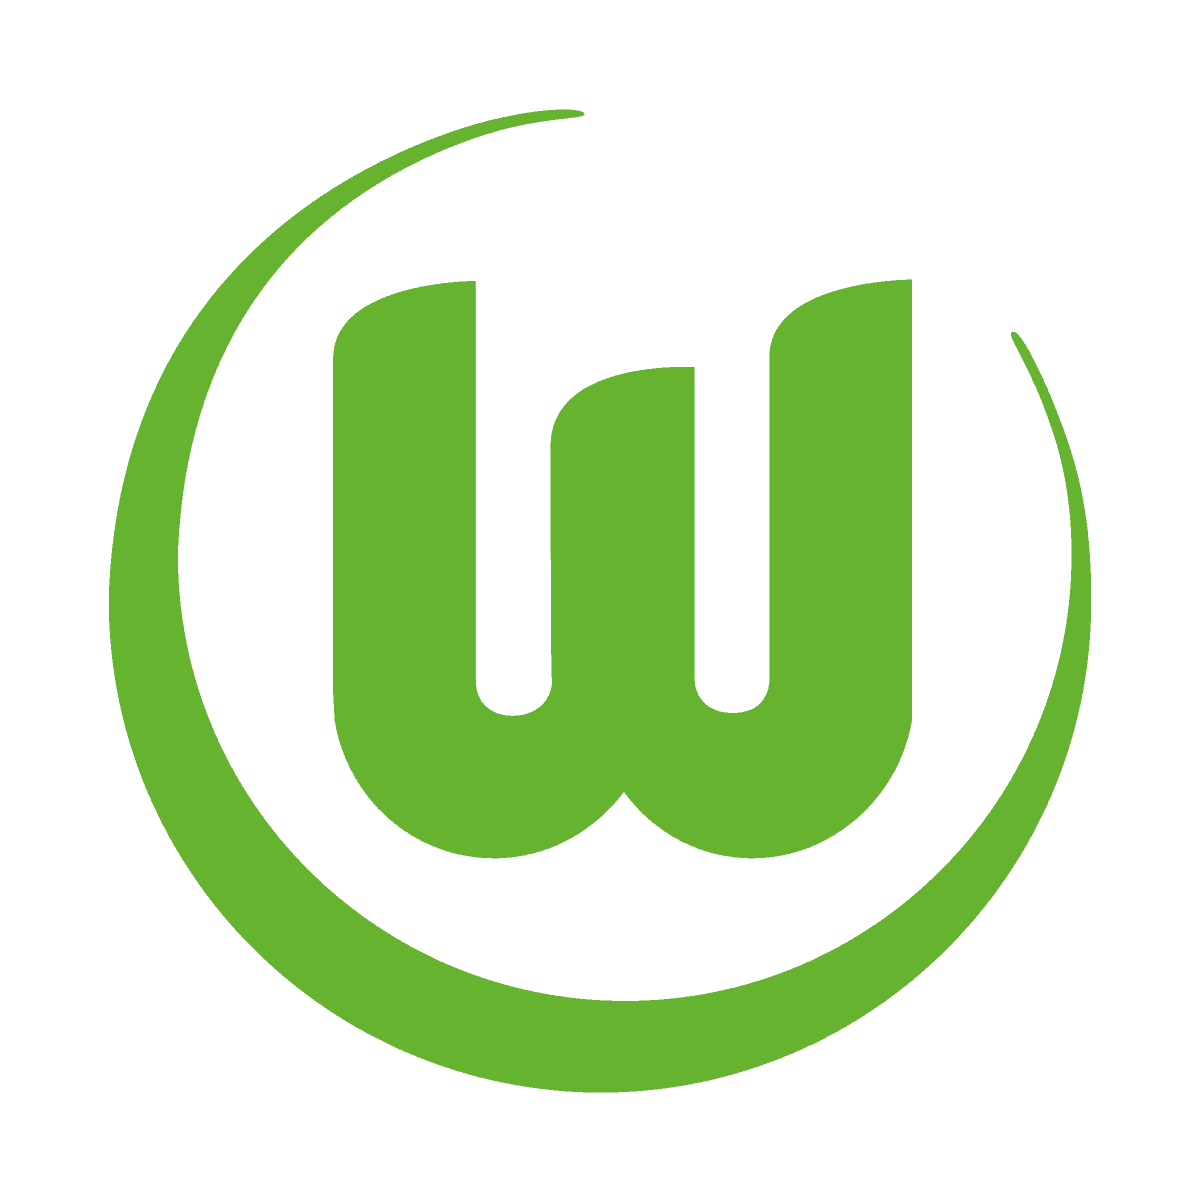 Breaking Down VfL Wolfsburg Player Salaries